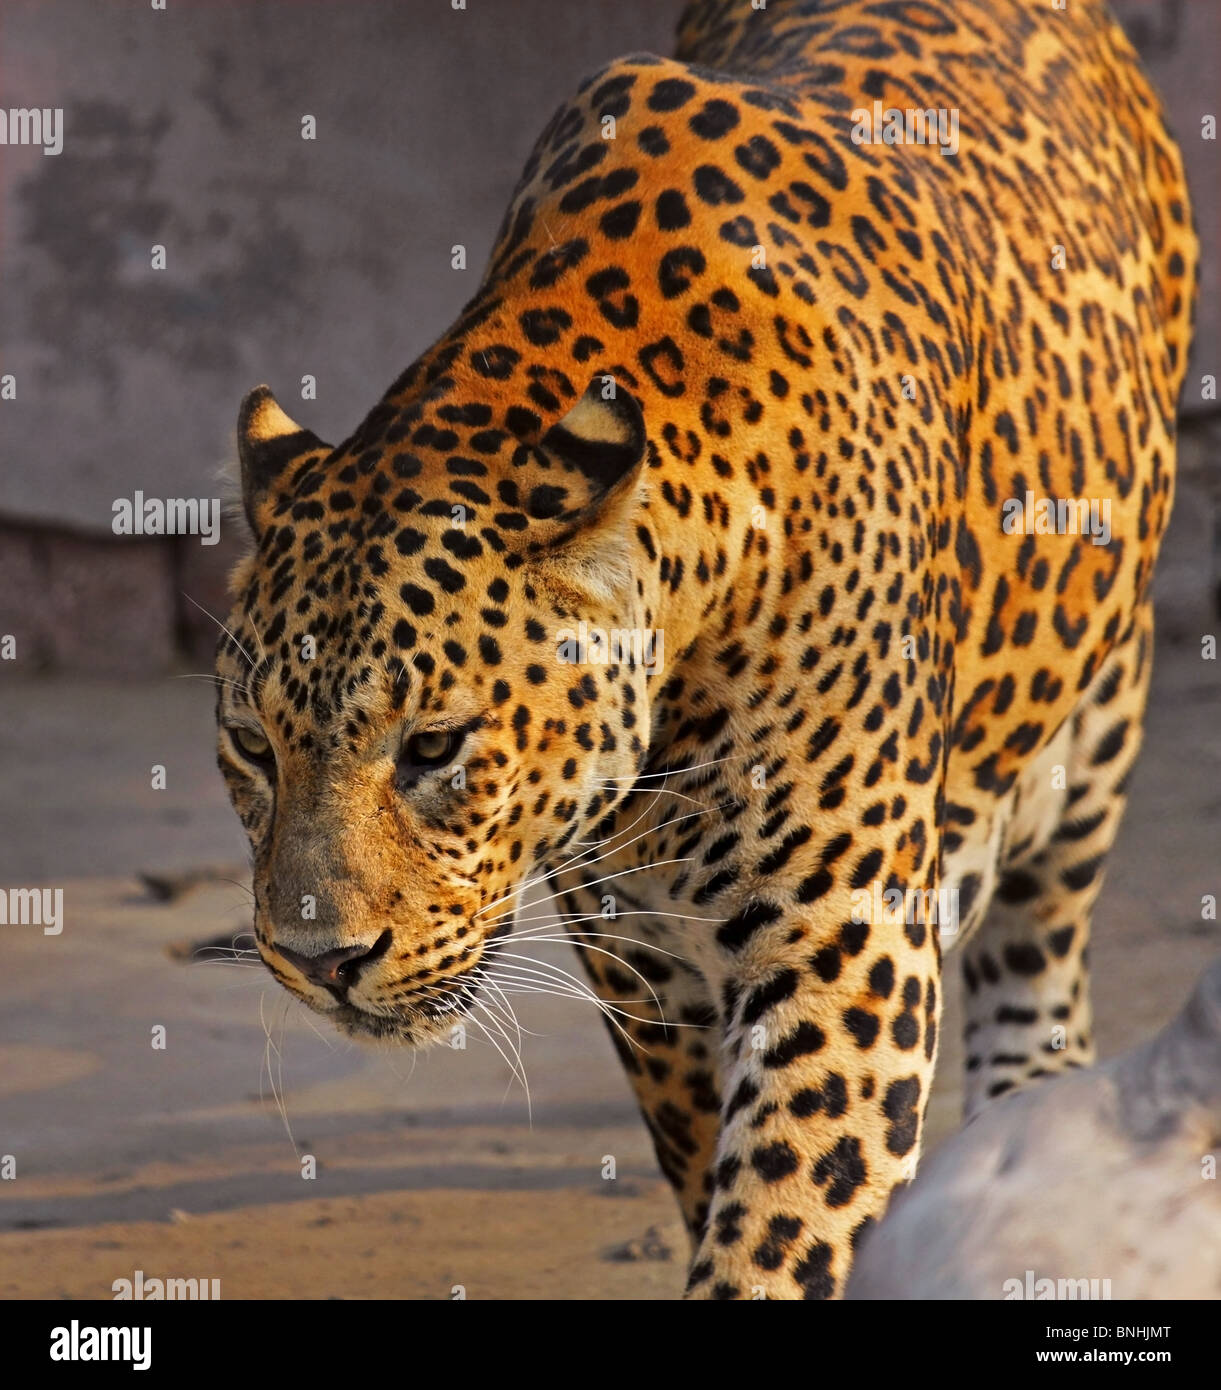 Leopard portrait shot. Picture taken in New Delhi Zoo, India Stock Photo